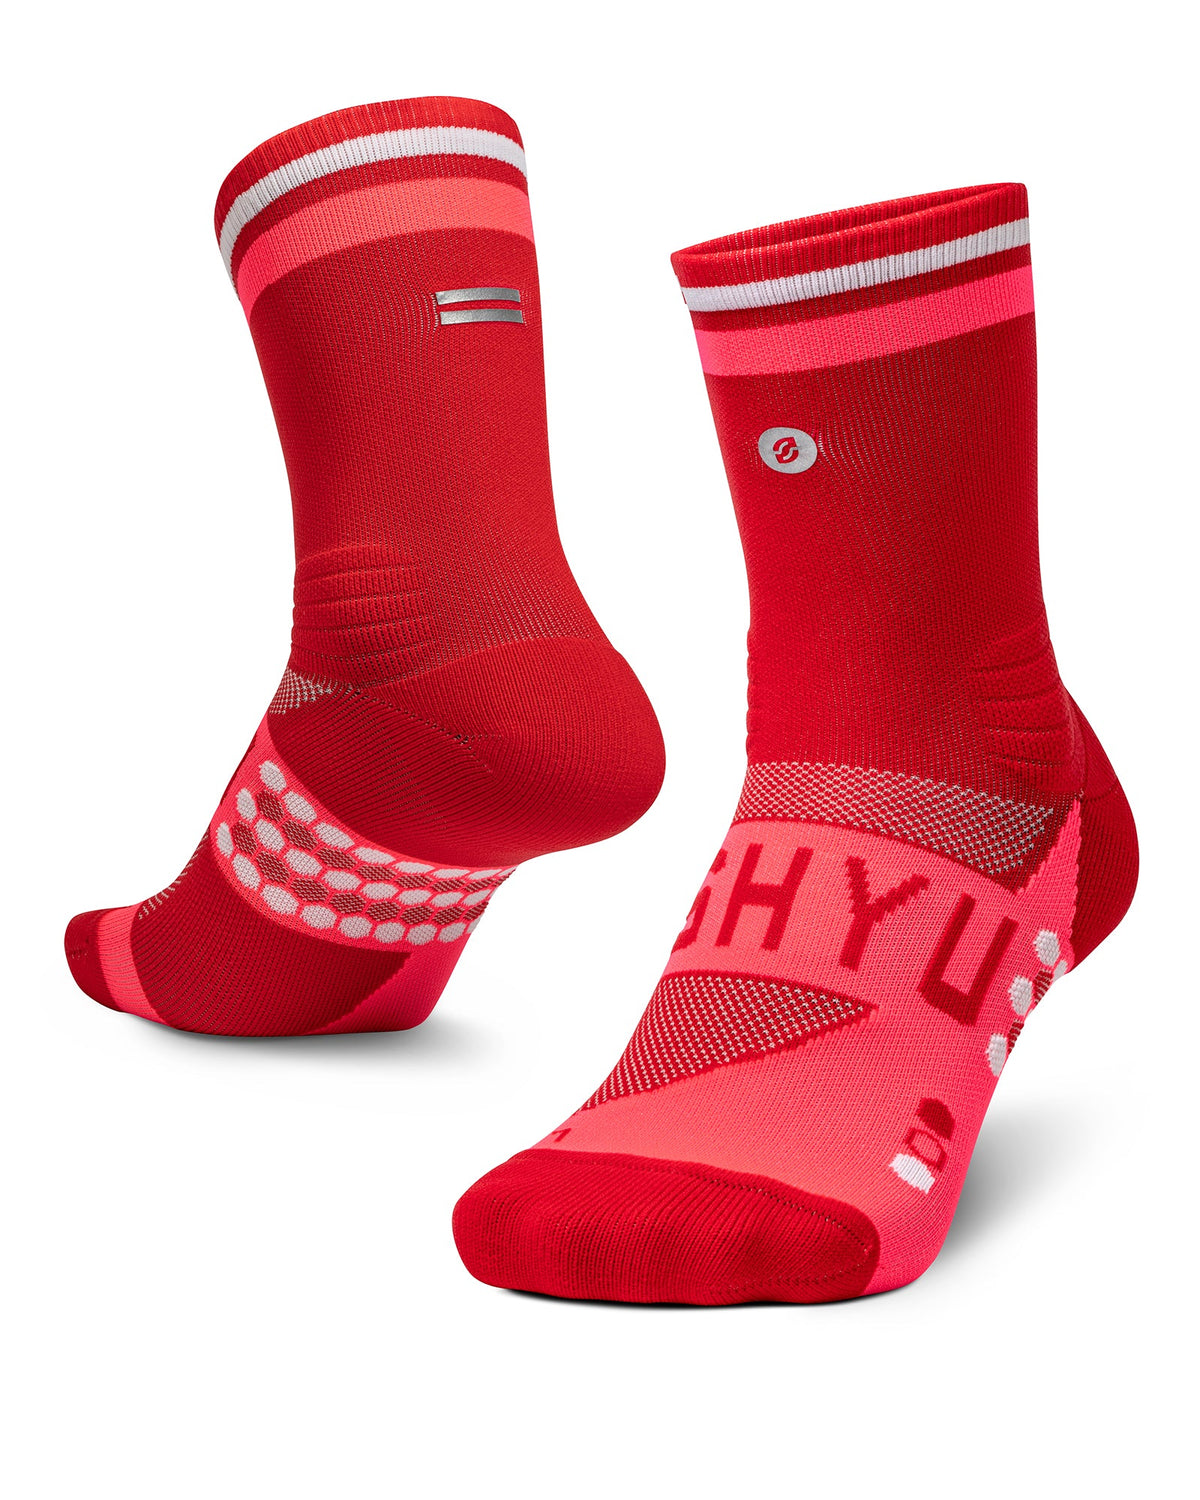 SHYU racing socks - red | pink | white (small sizes)